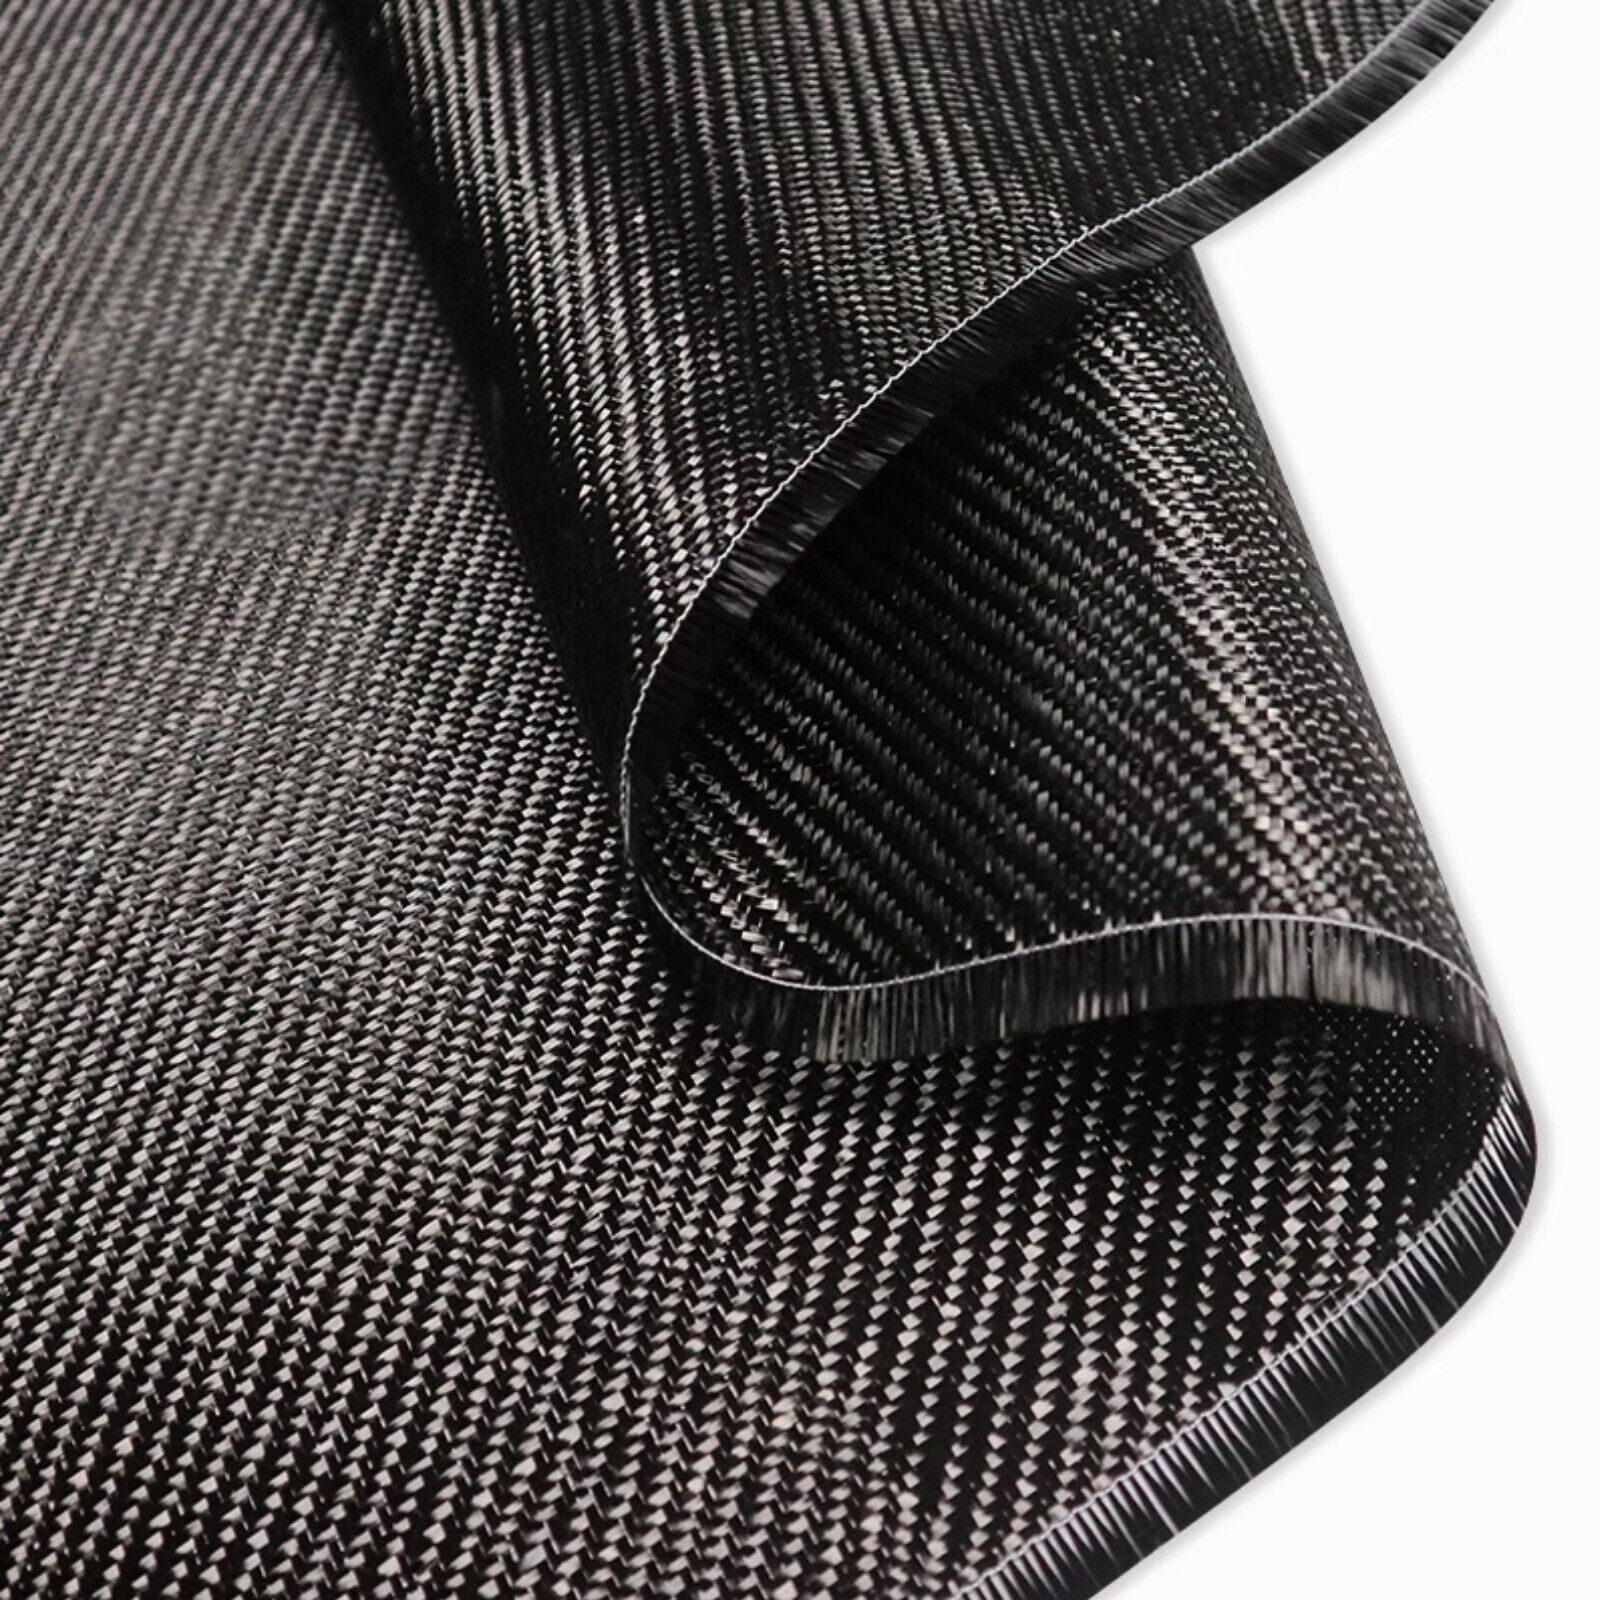 12ft Twill Weave Carbon Fiber Cloth Marine Grade Vinyl Upholstery Fabric 3k 200g